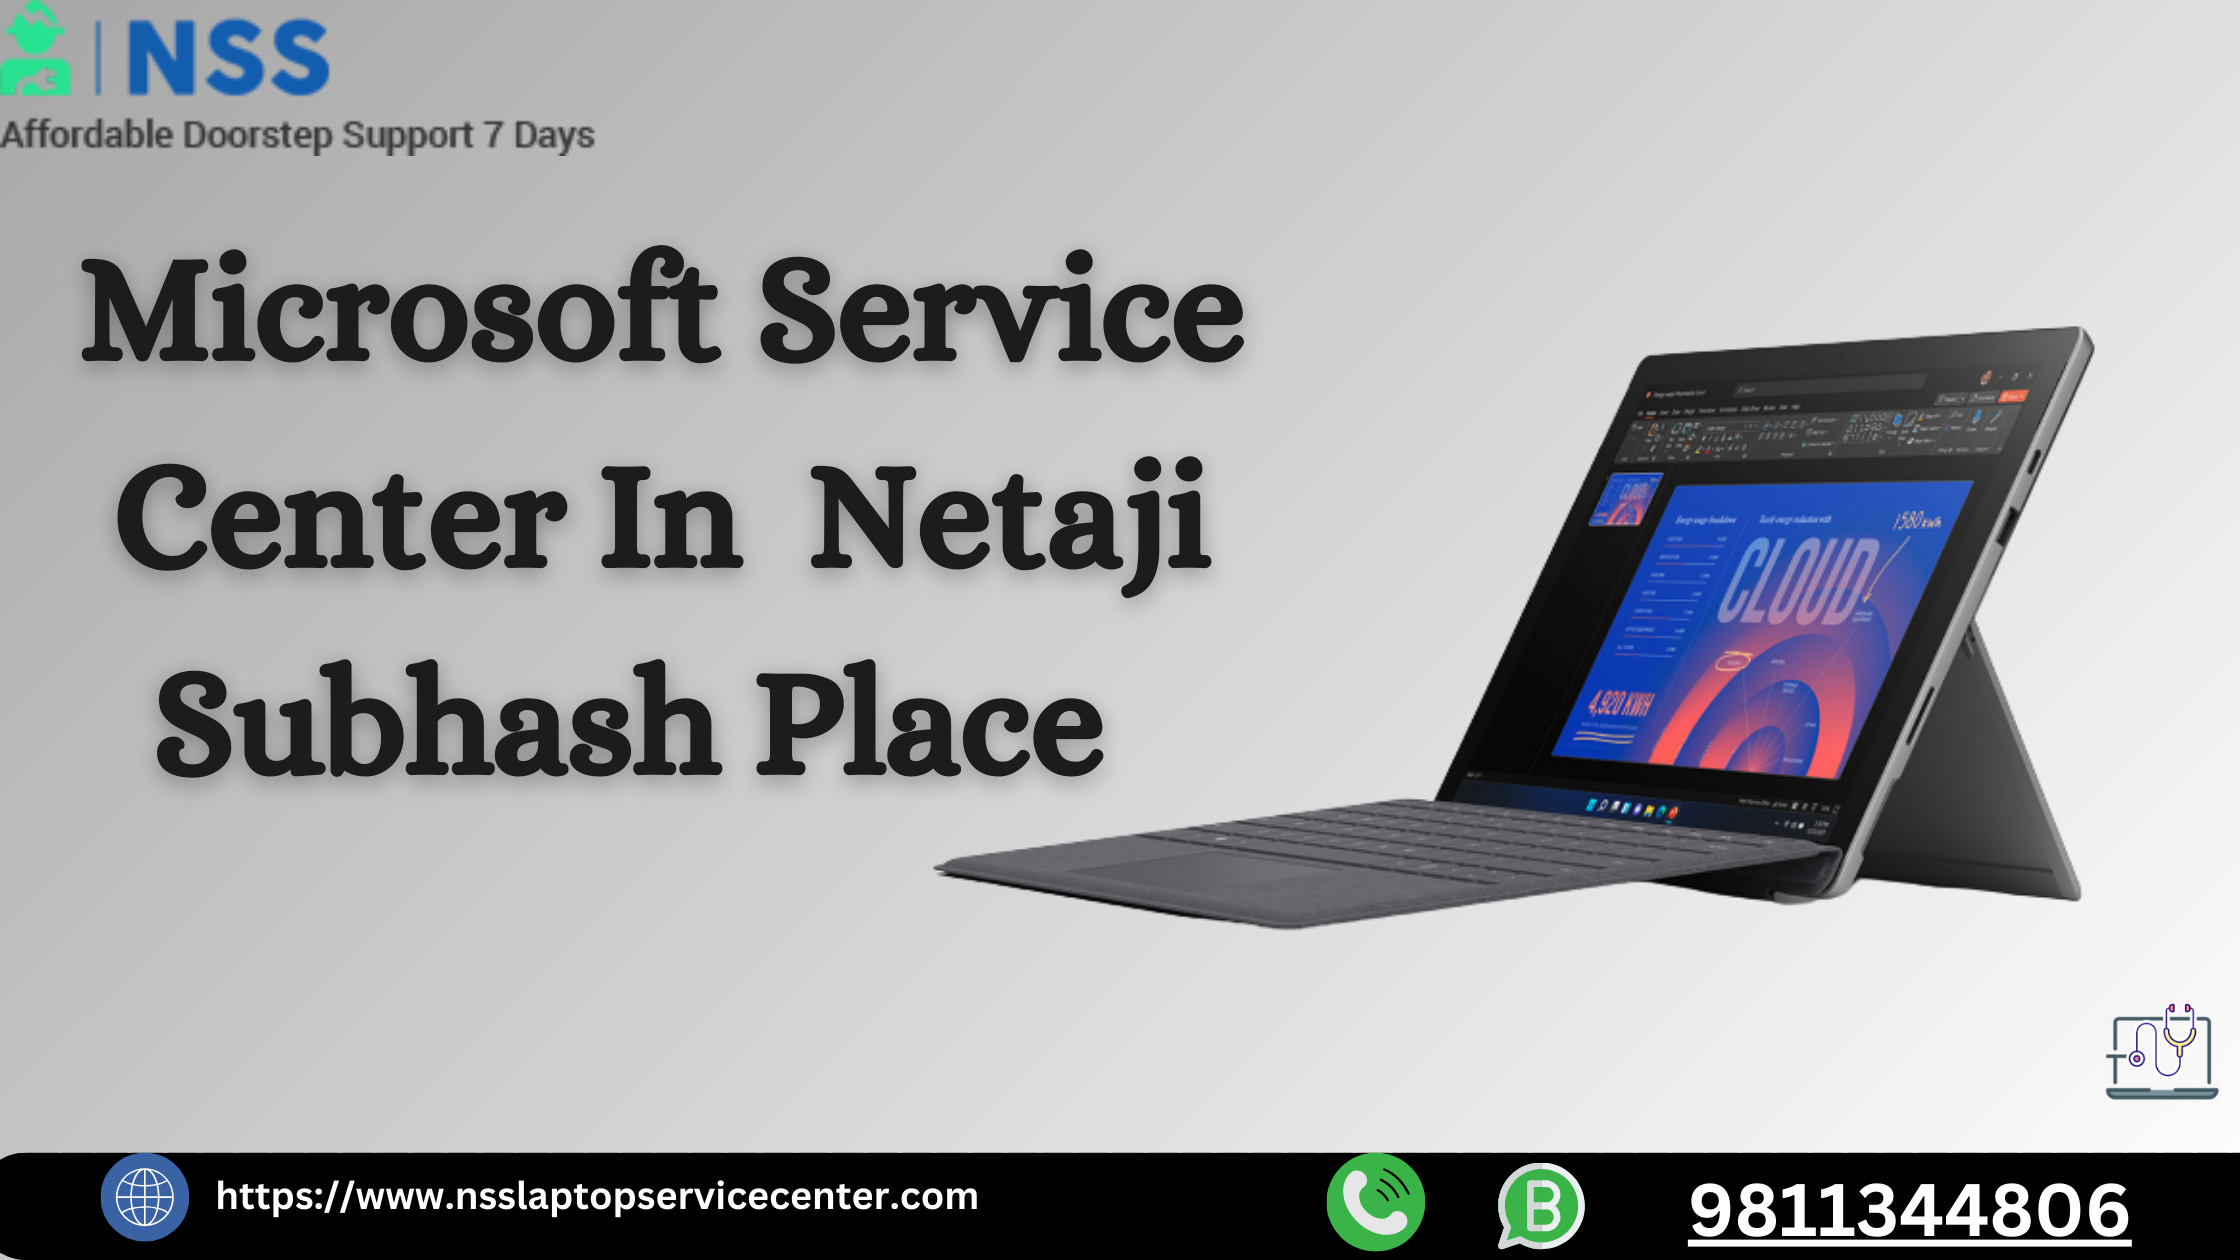 Microsoft Service Center in Netaji Subhash Place Near Delhi